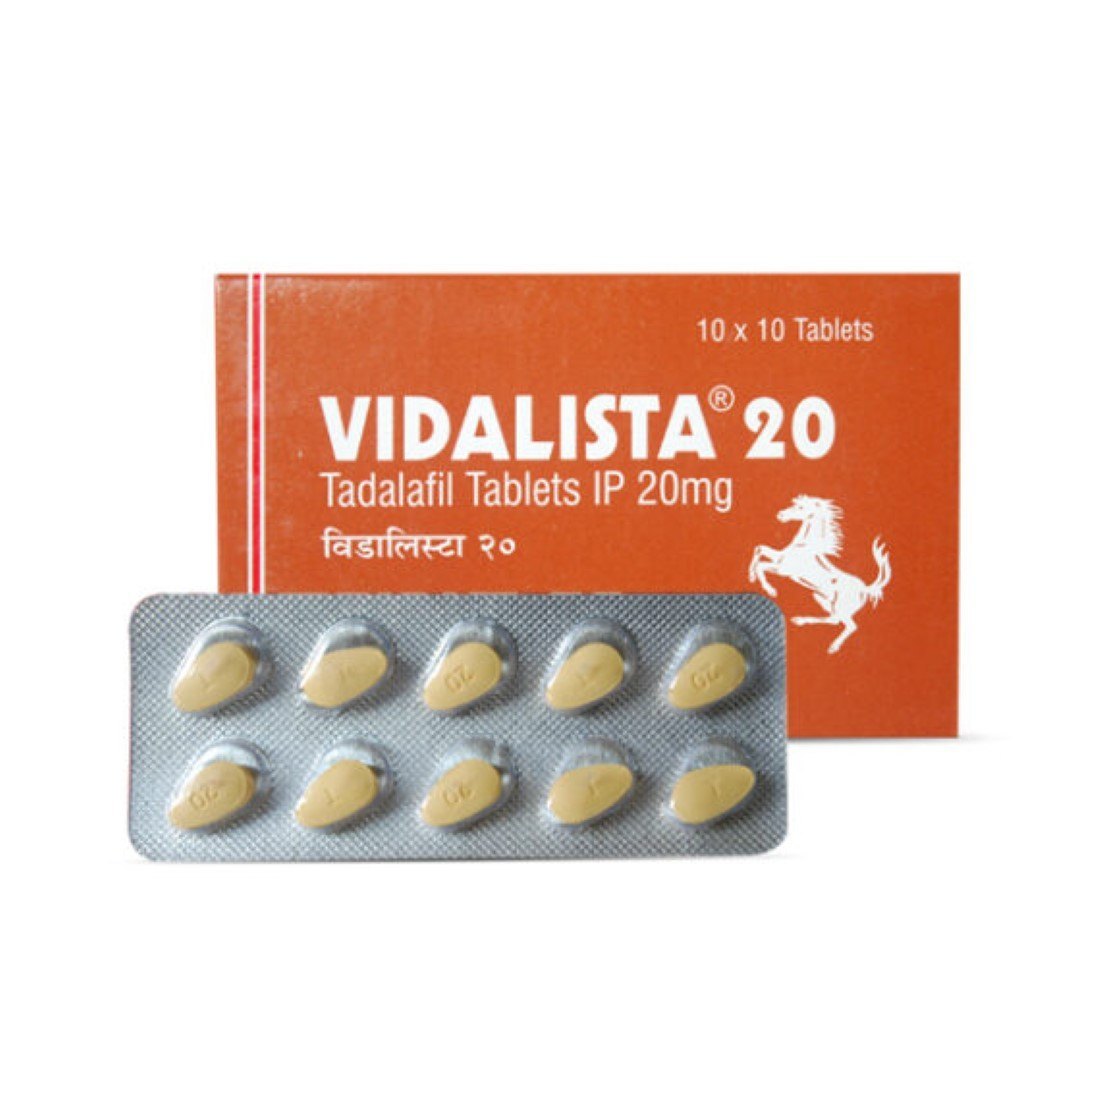 vidalista-20-mg